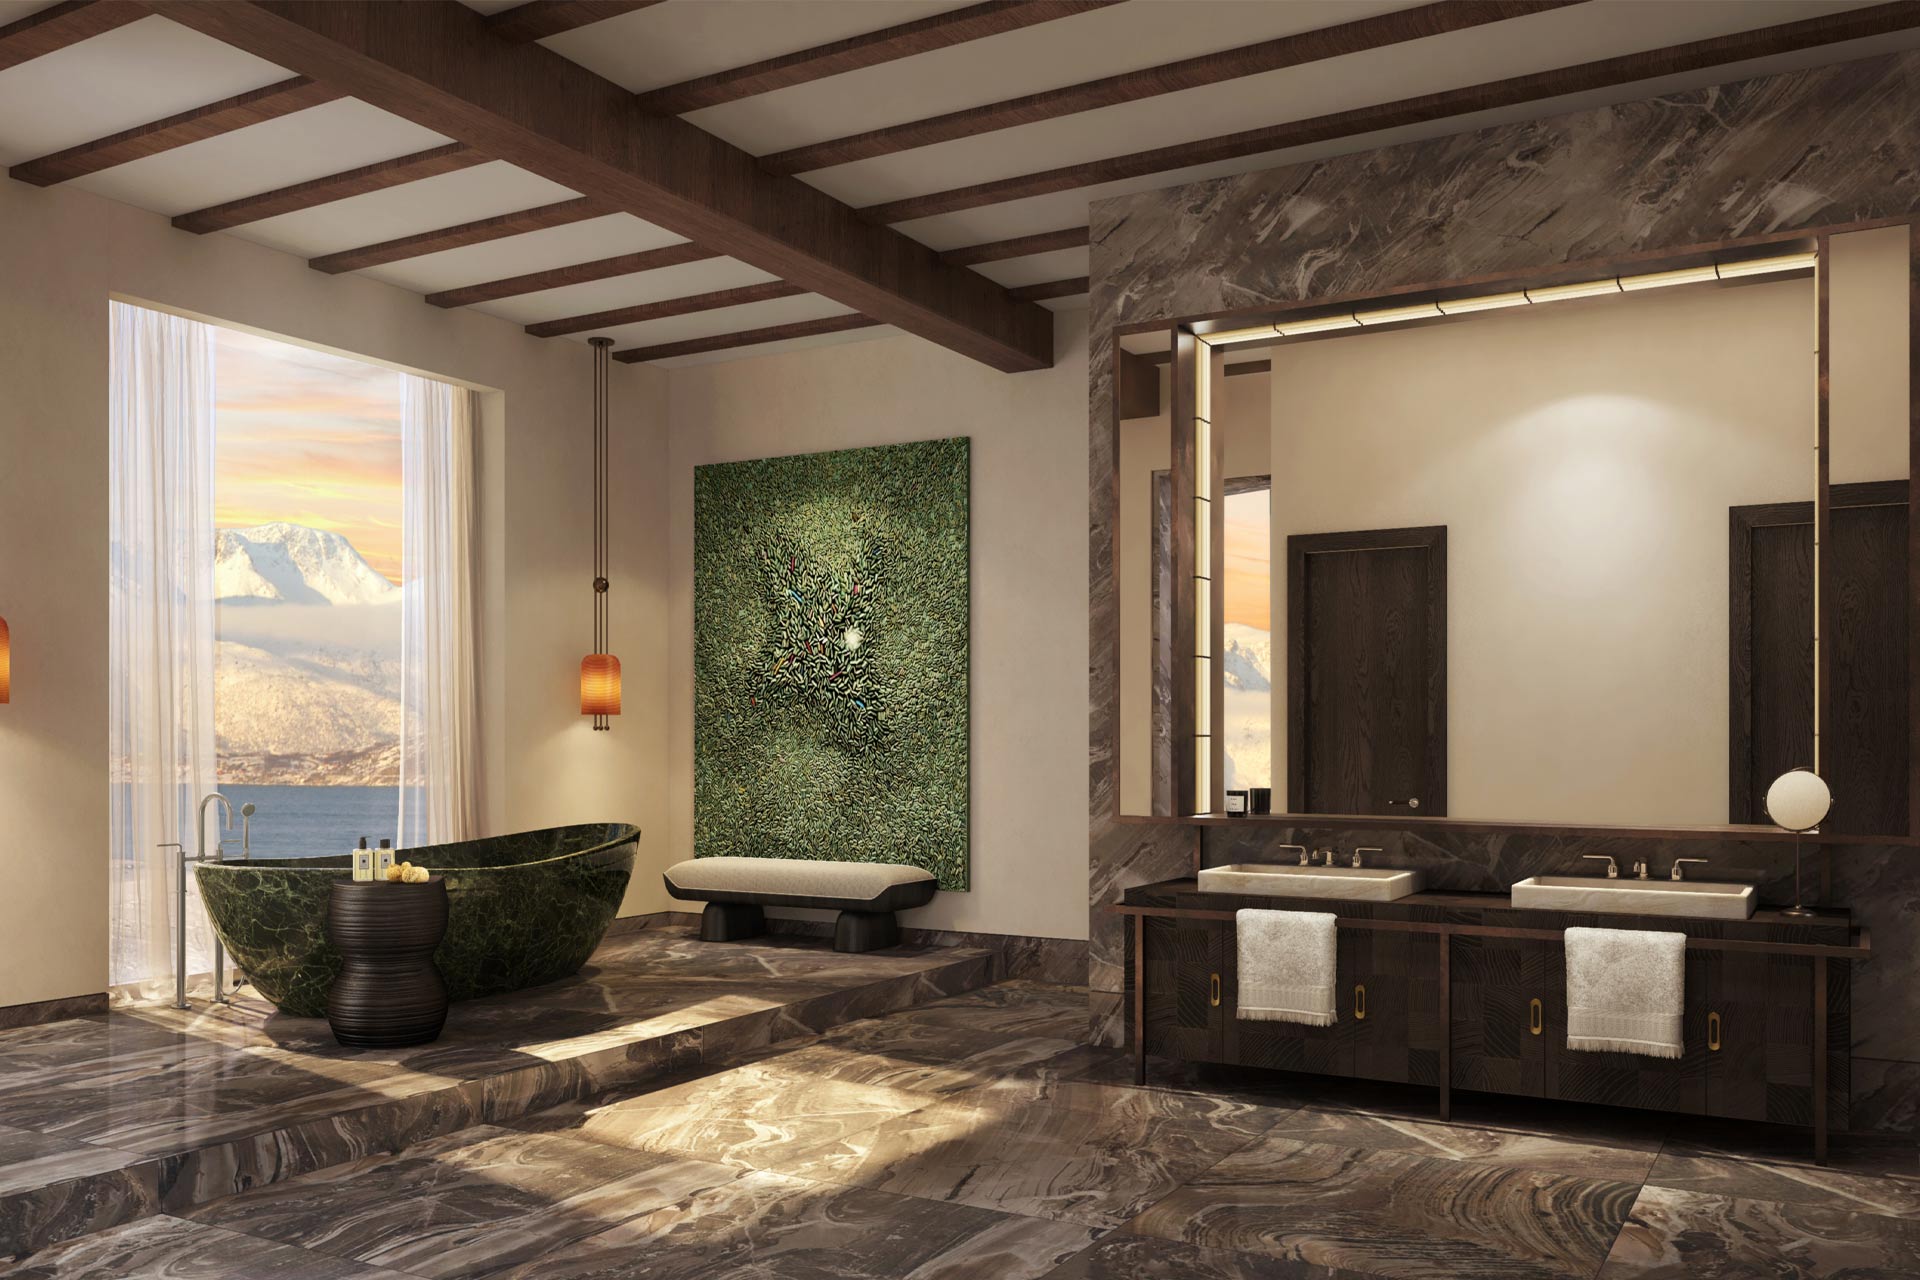 Bathroom at a new Norwegian hotel designed by Bergman Interiors